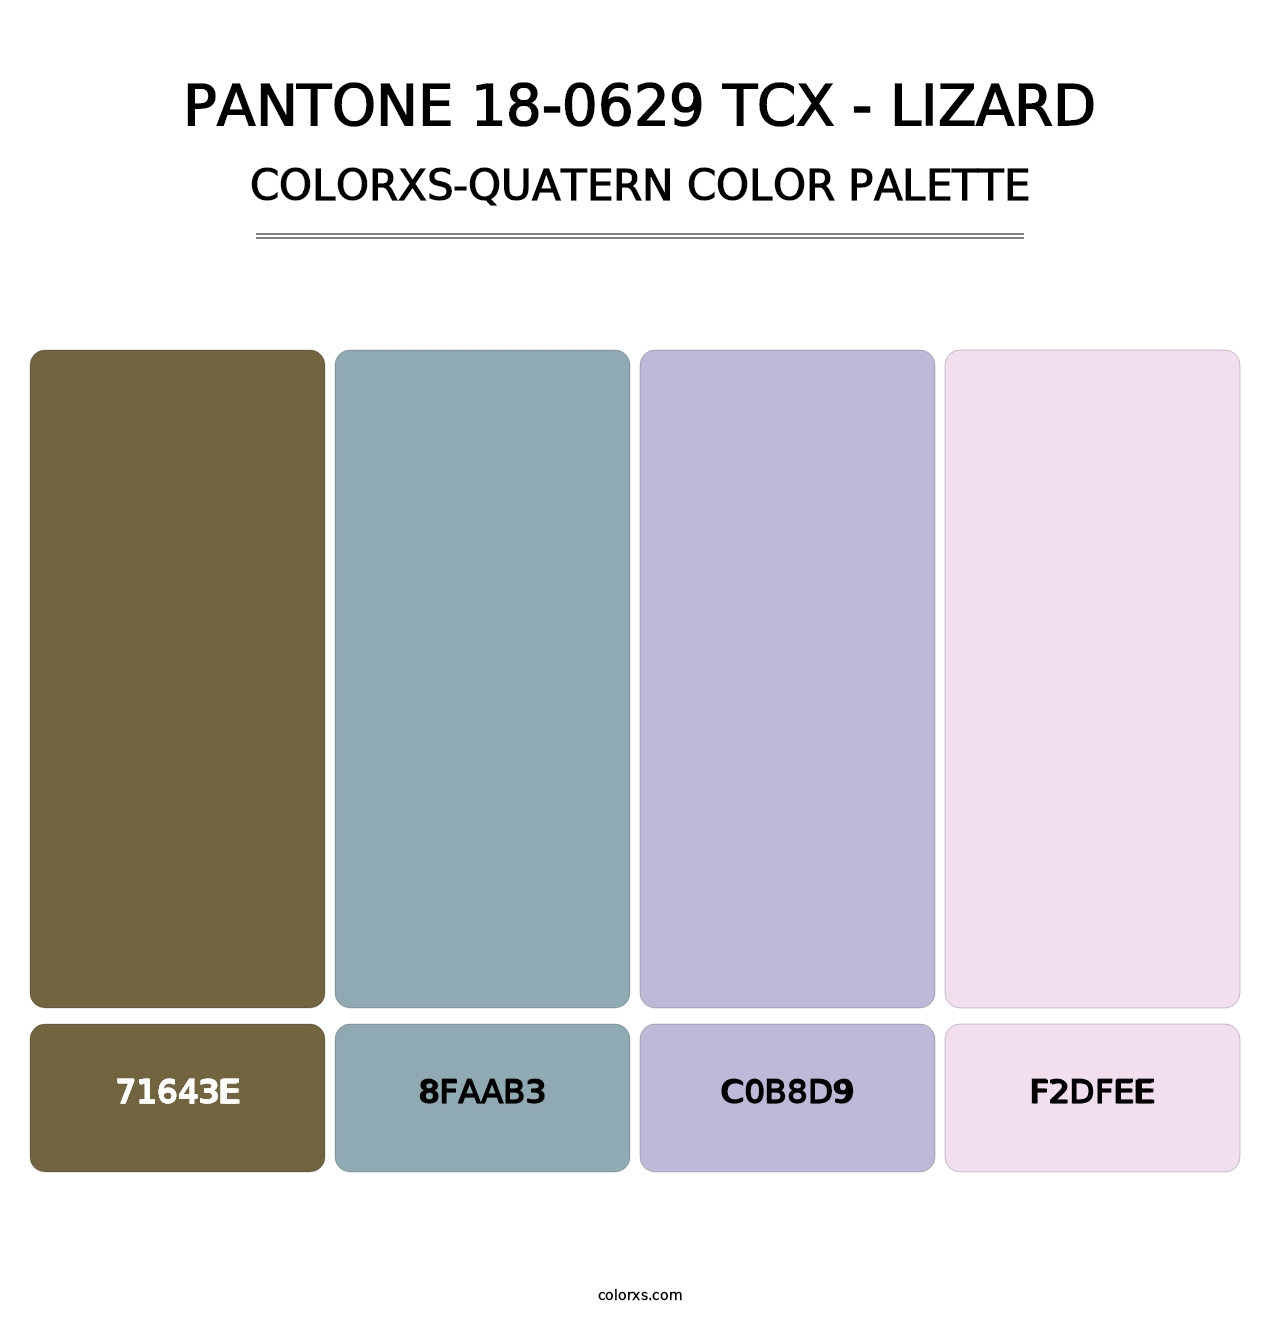 PANTONE 18-0629 TCX - Lizard - Colorxs Quatern Palette